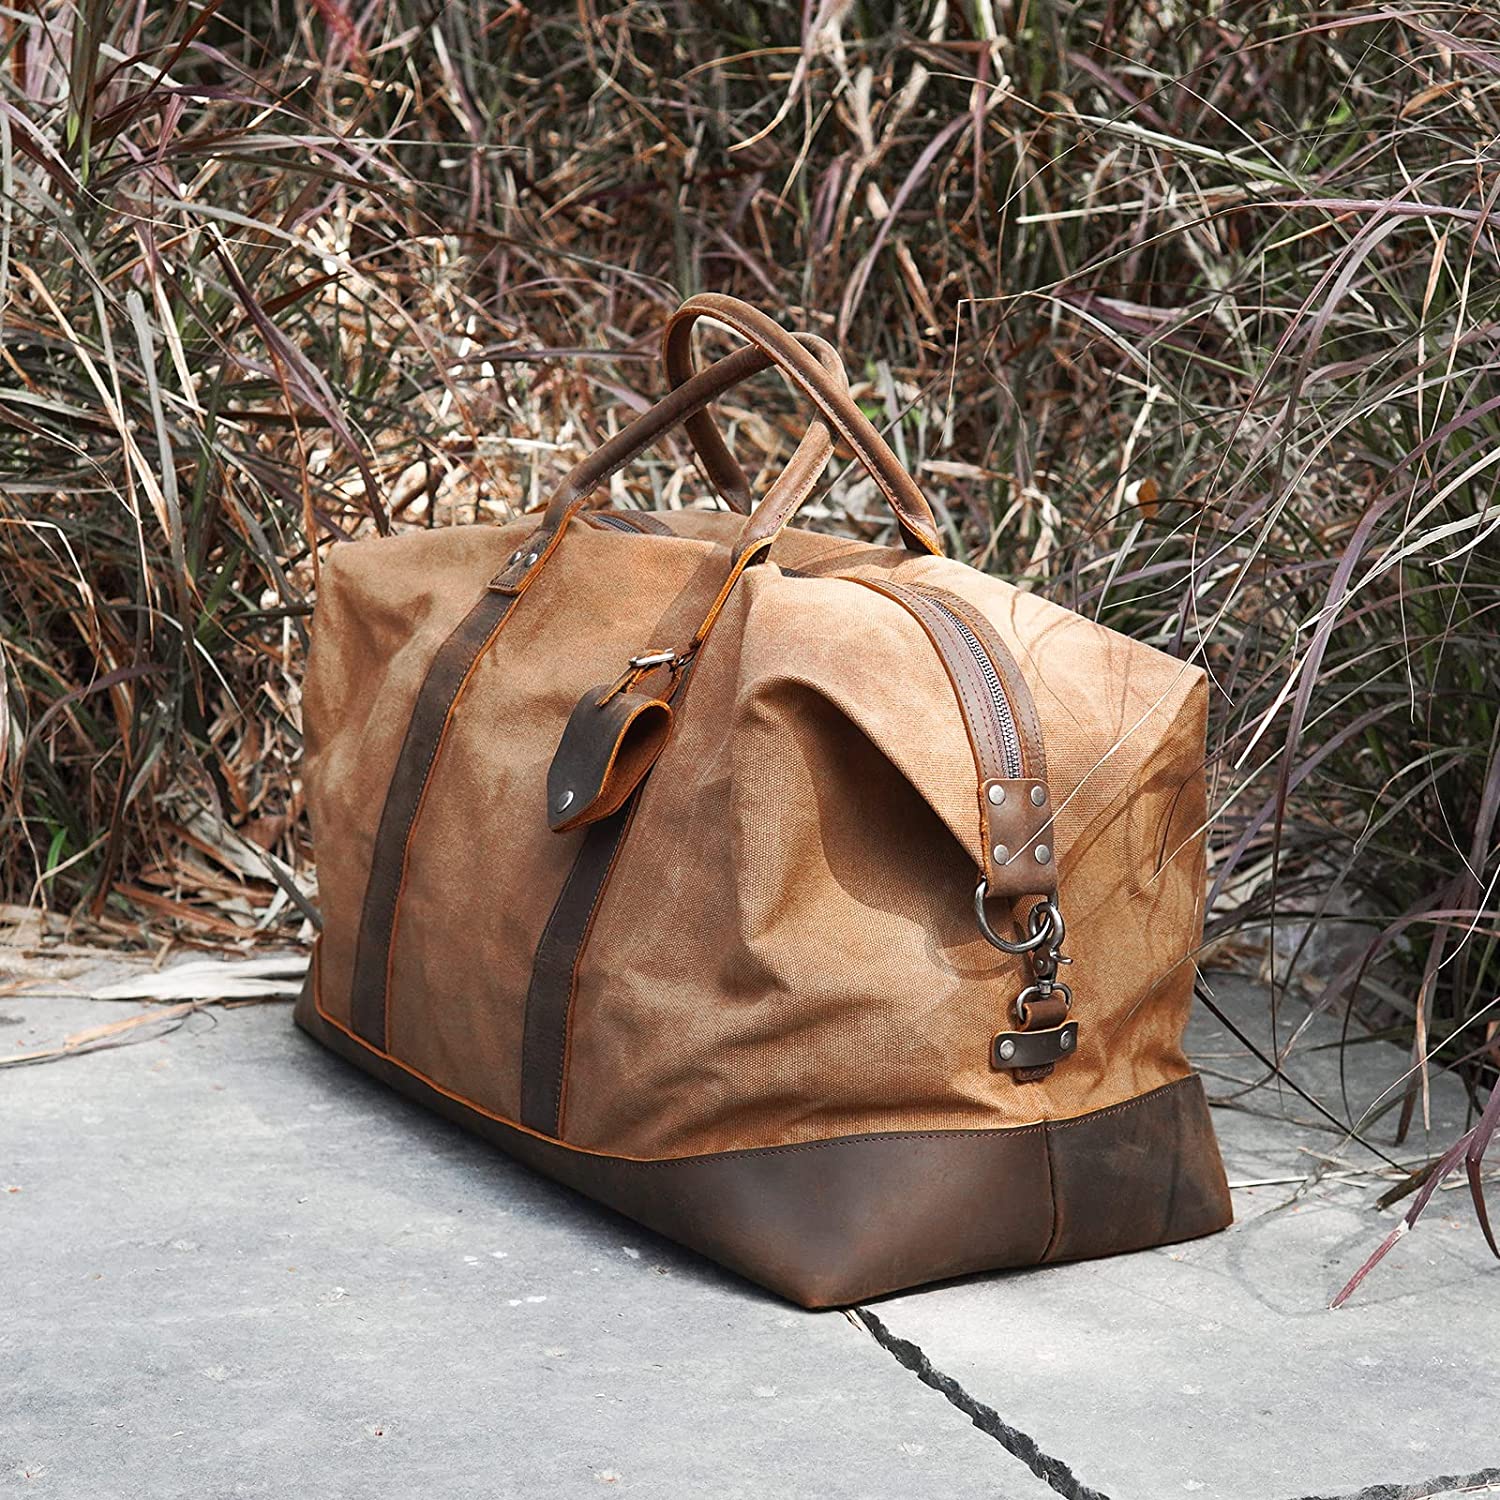 Canvas Duffle Bag ,Travel Duffel Bags, Canvas Weekender Bag